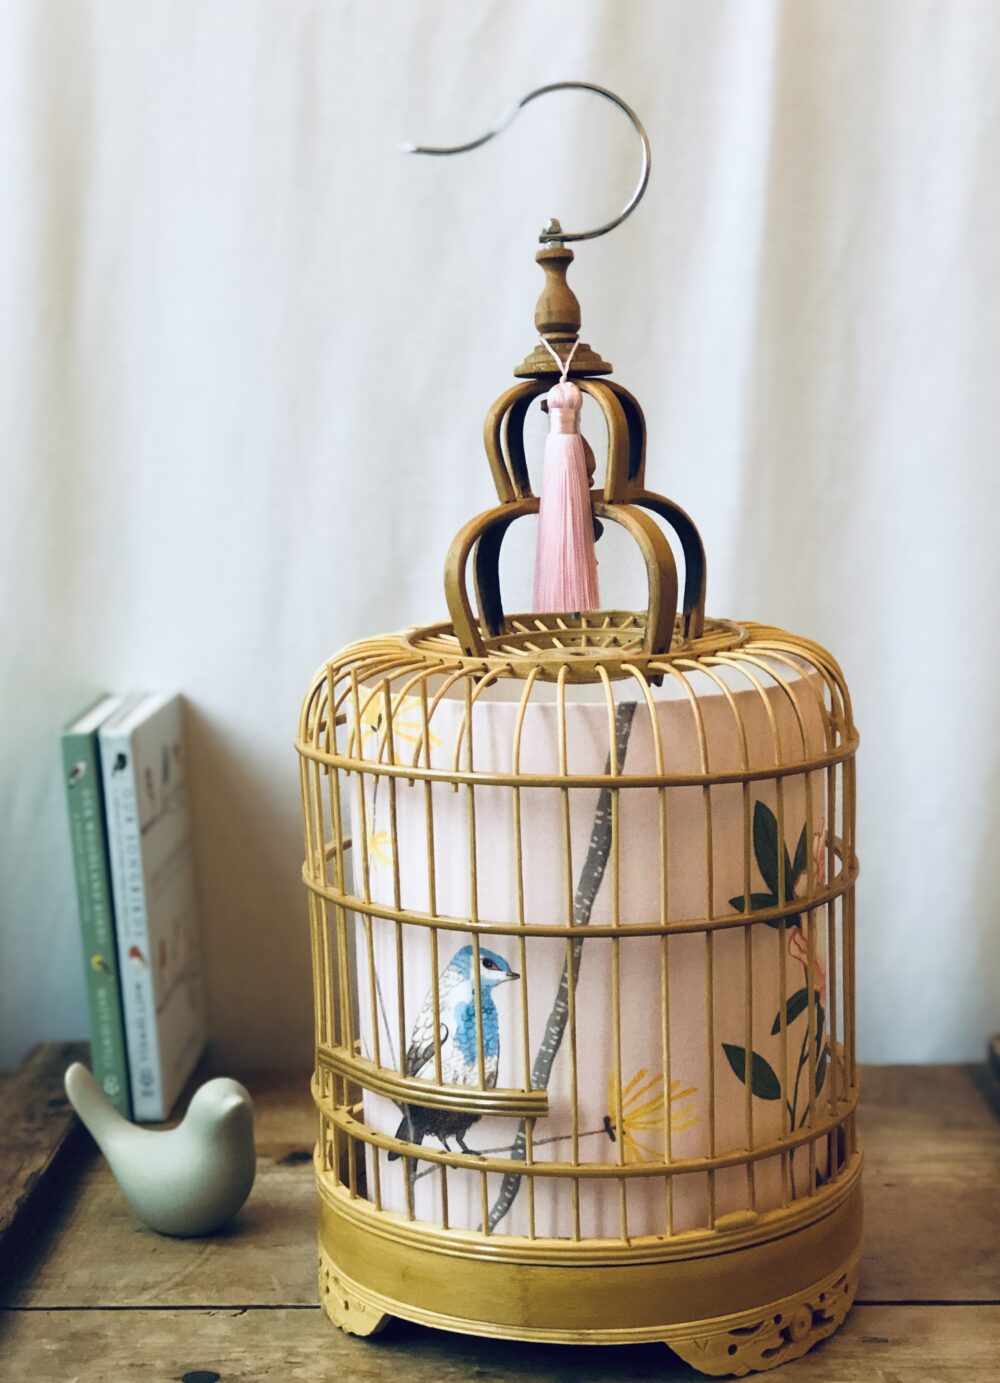 bamboo-birdcage-lamp-lantern-with-pale-pink-bird-shade